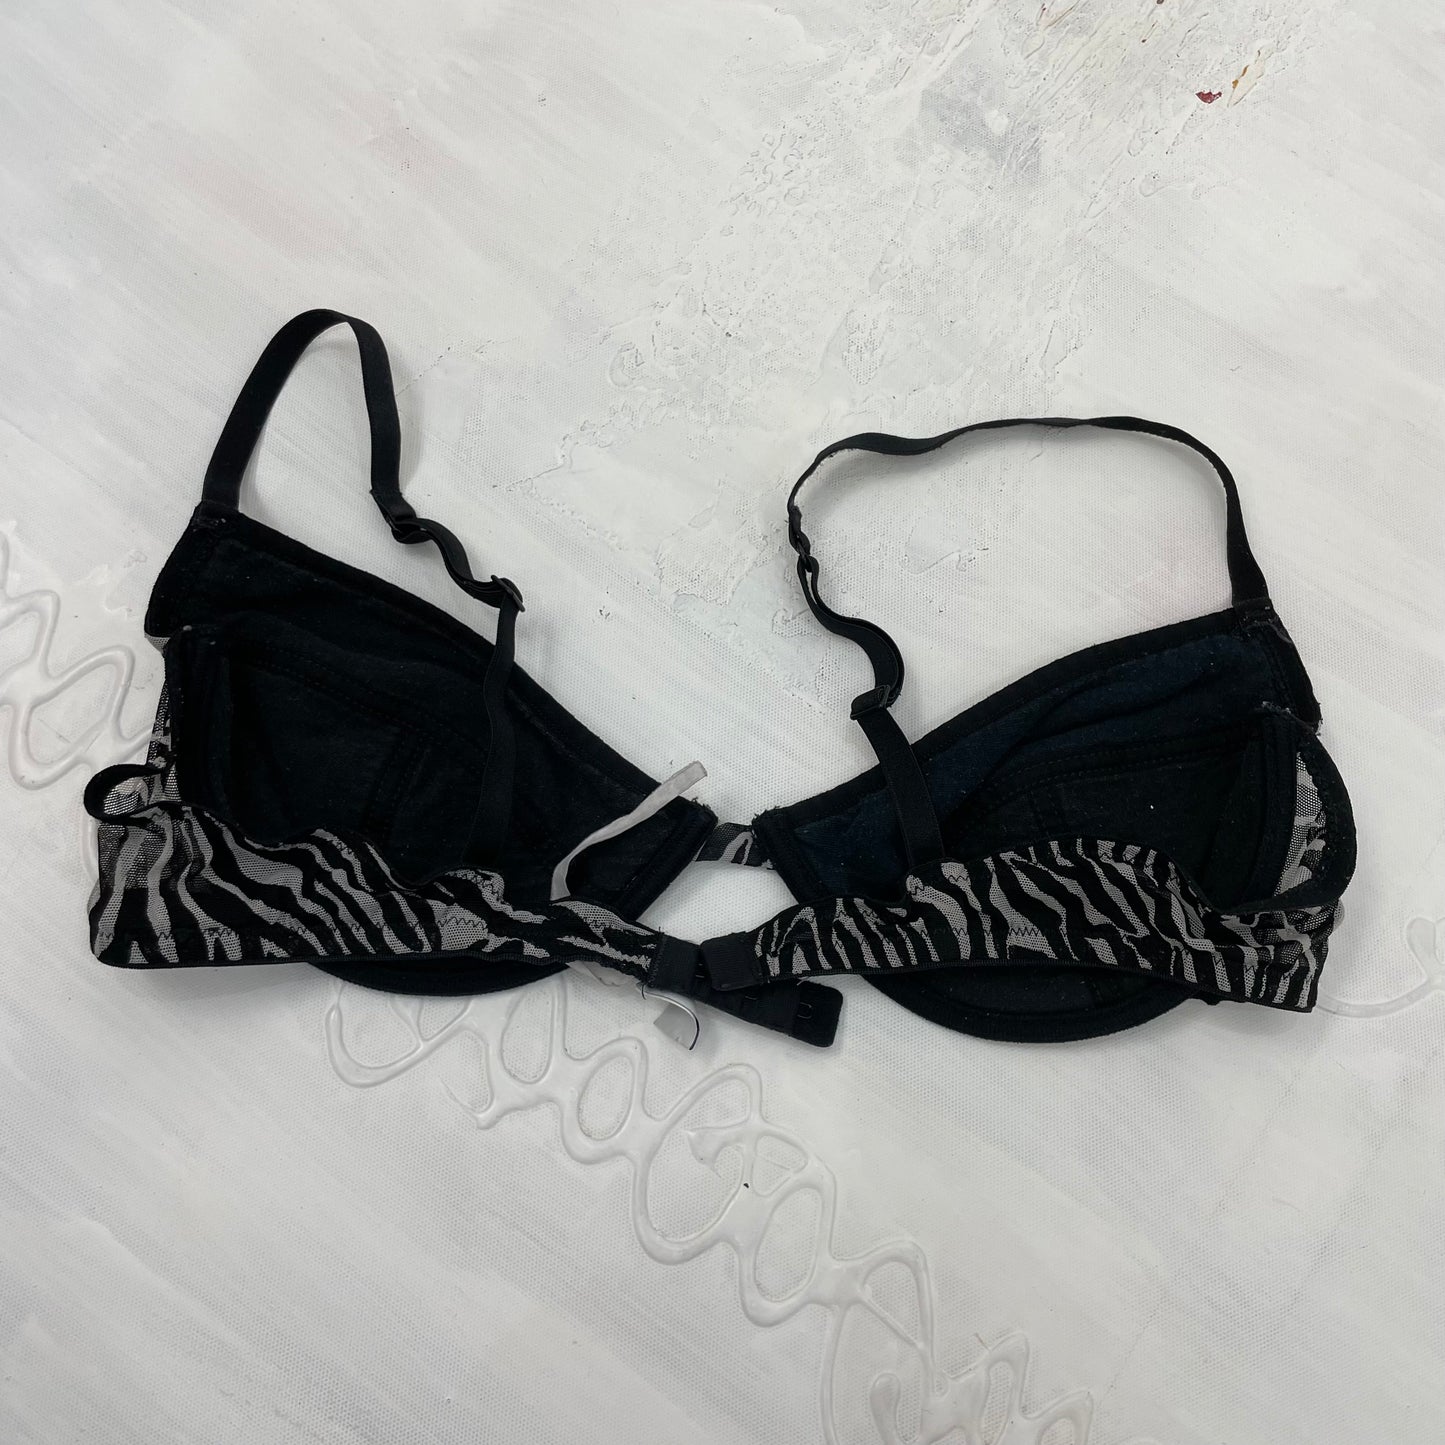 MOB WIFE DROP | small black and white intimissimi tiger print bra